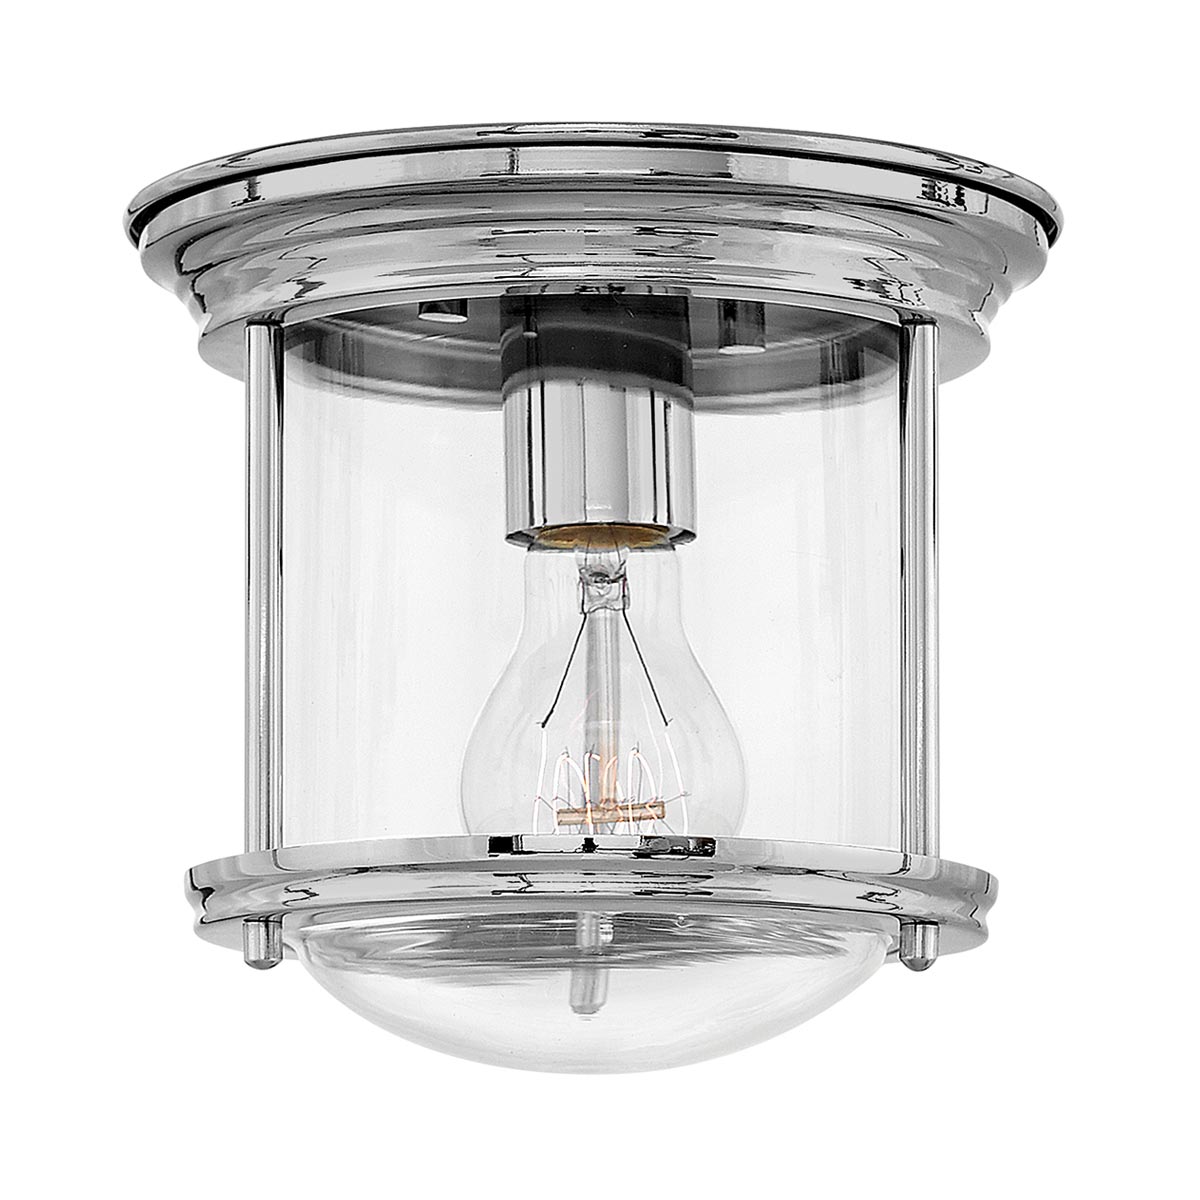 Hadrian Small Polished Chrome 1 Lamp Bathroom Ceiling Light Clear Glass